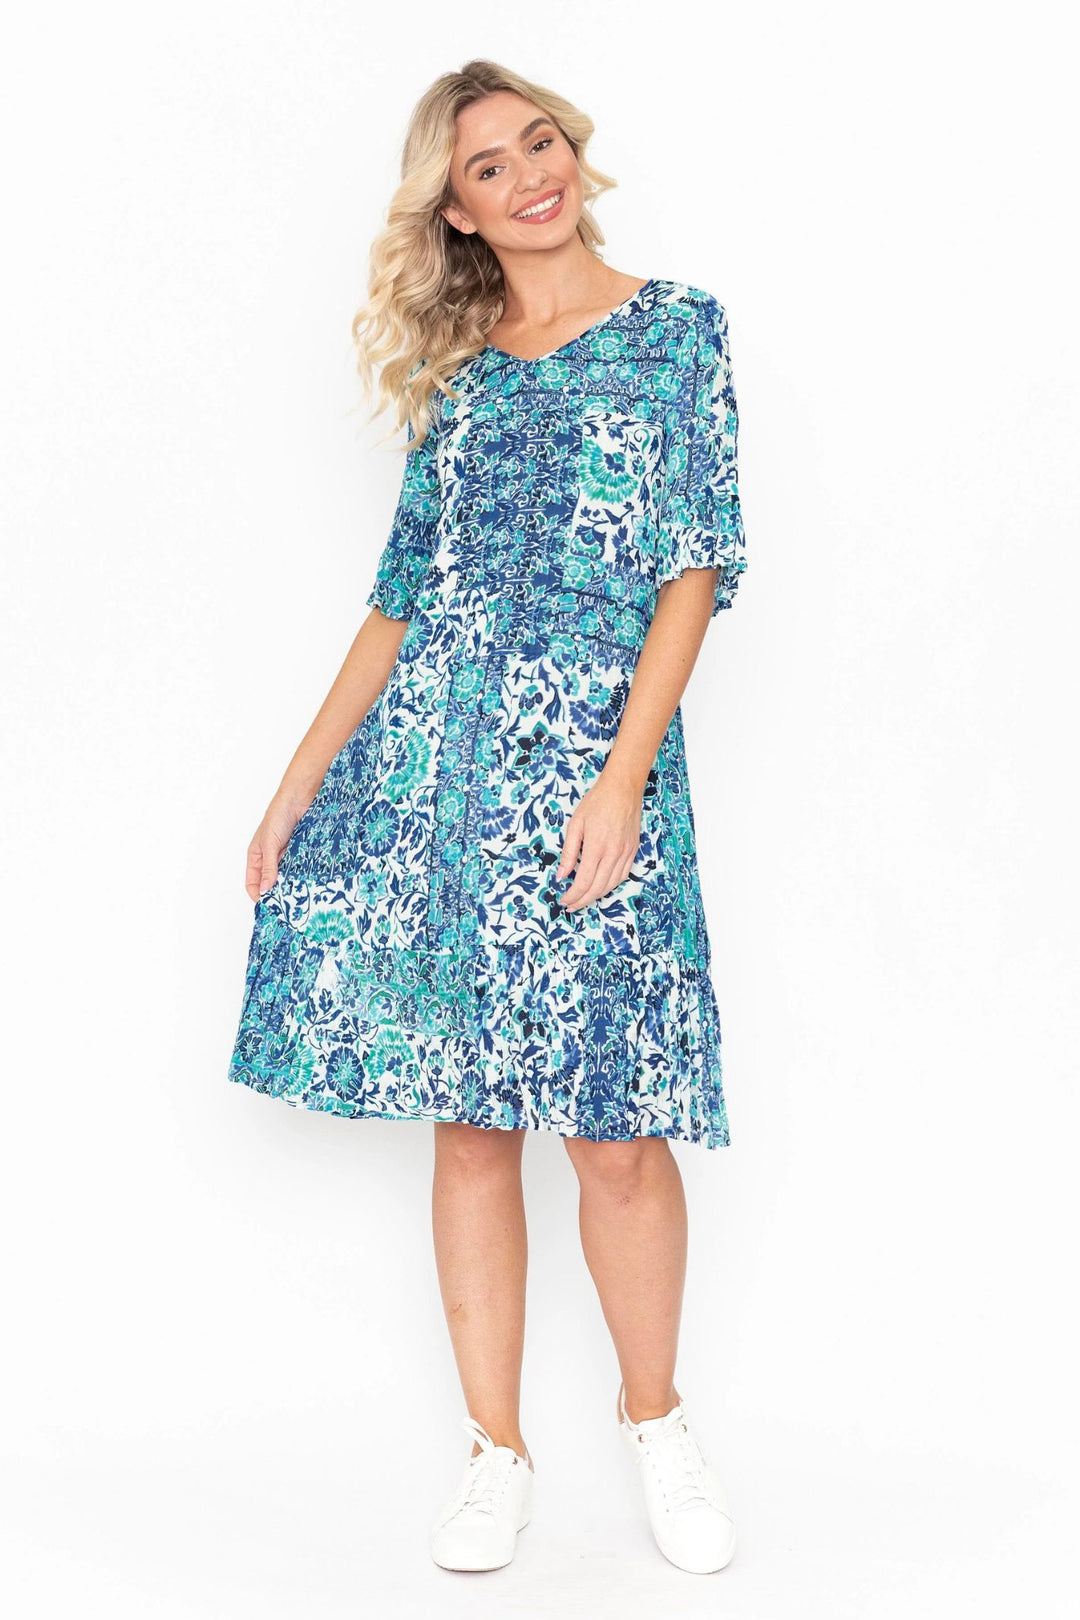 One Summer DW2E Blue Botanical Print Jessica Dress - Experience Boutique